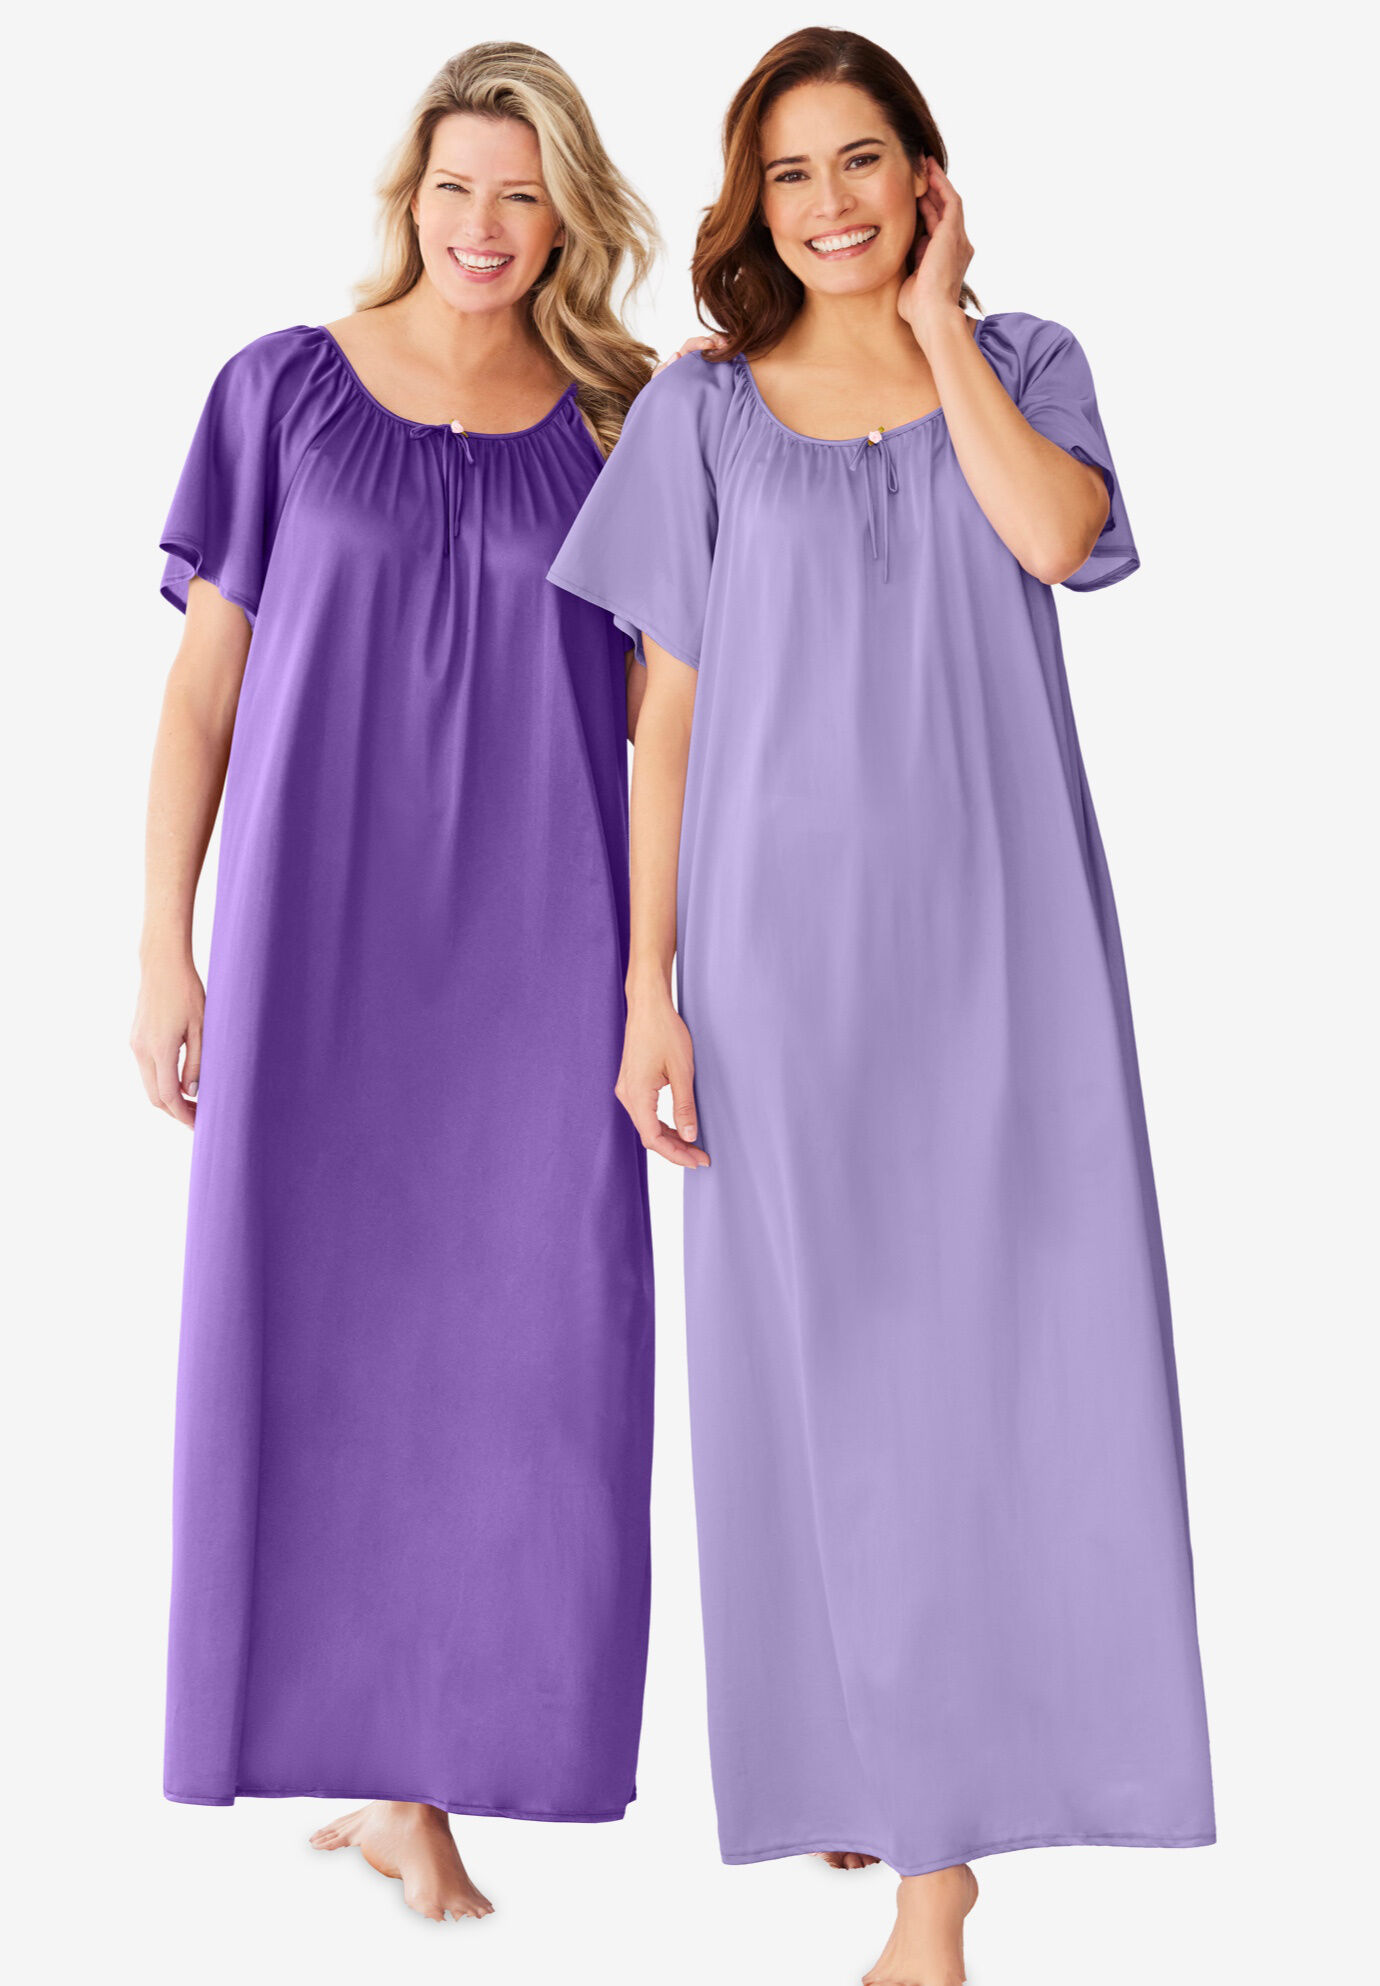 4x cotton nightgown